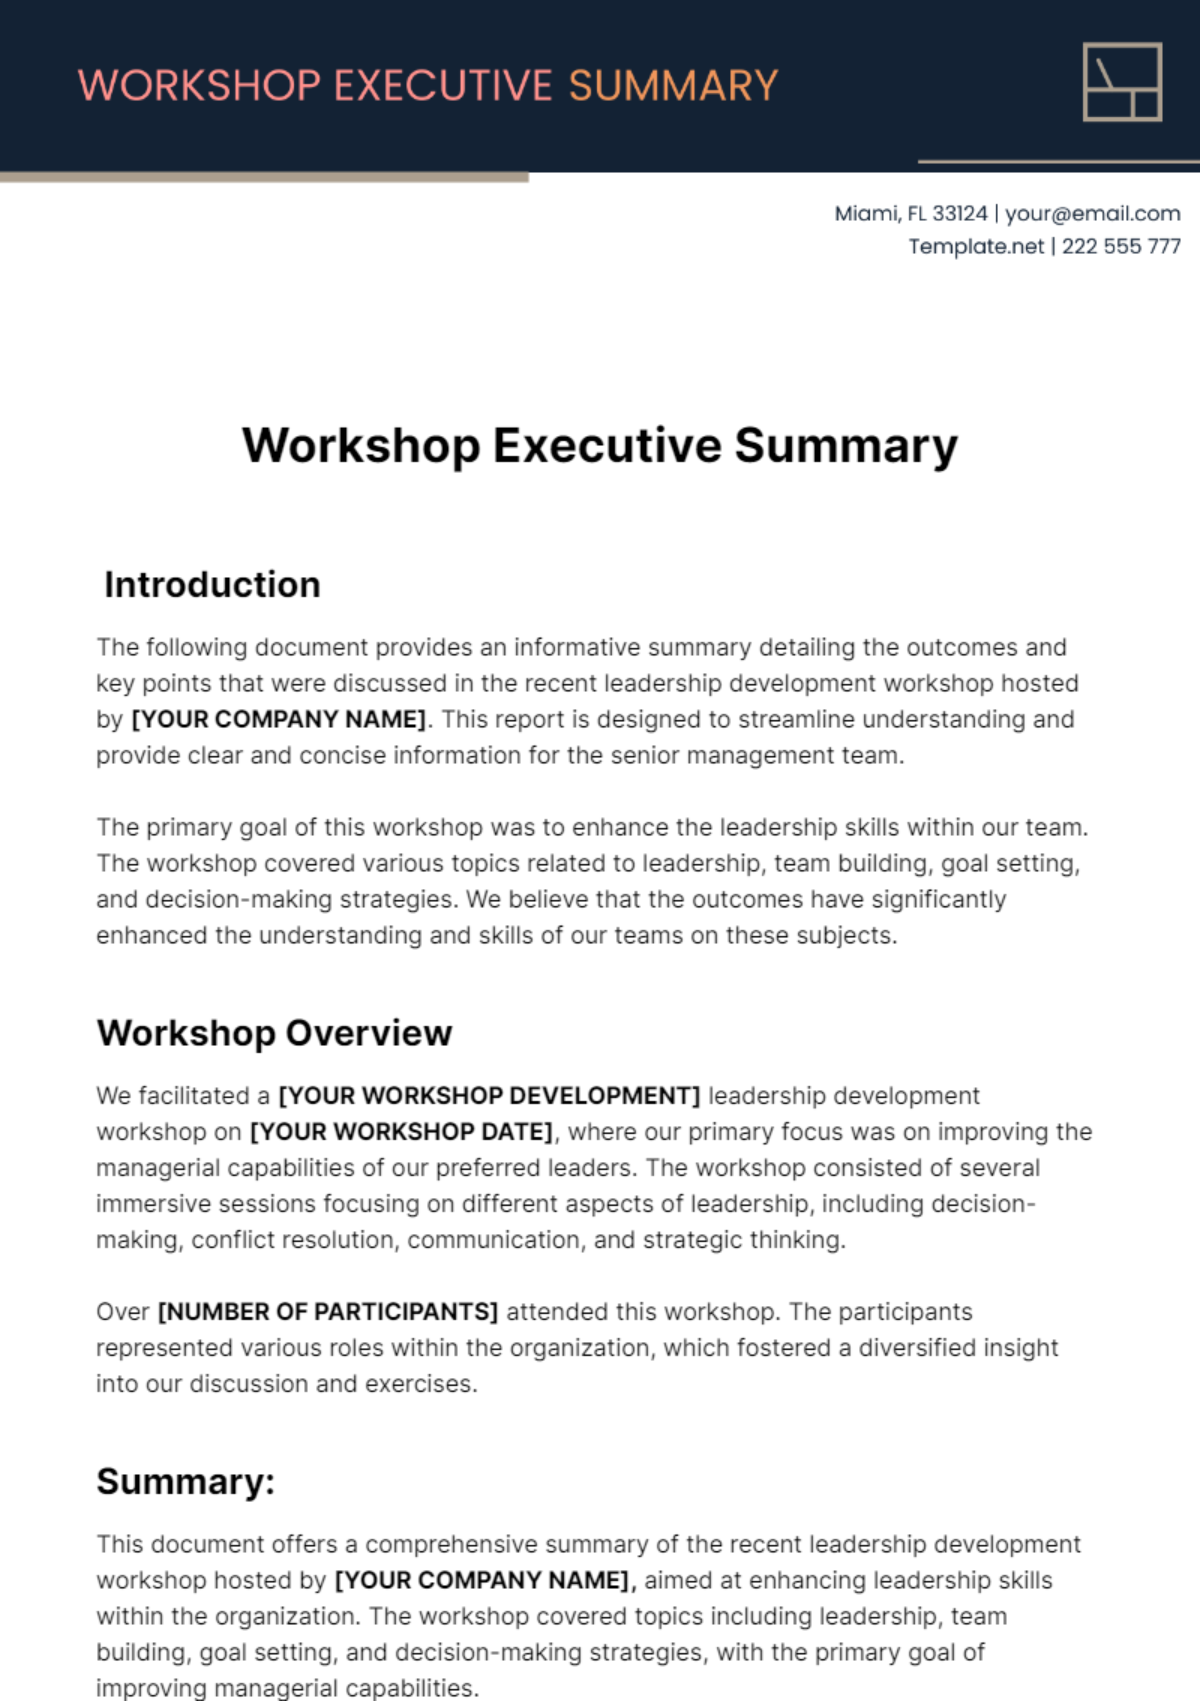 Workshop Executive Summary Template